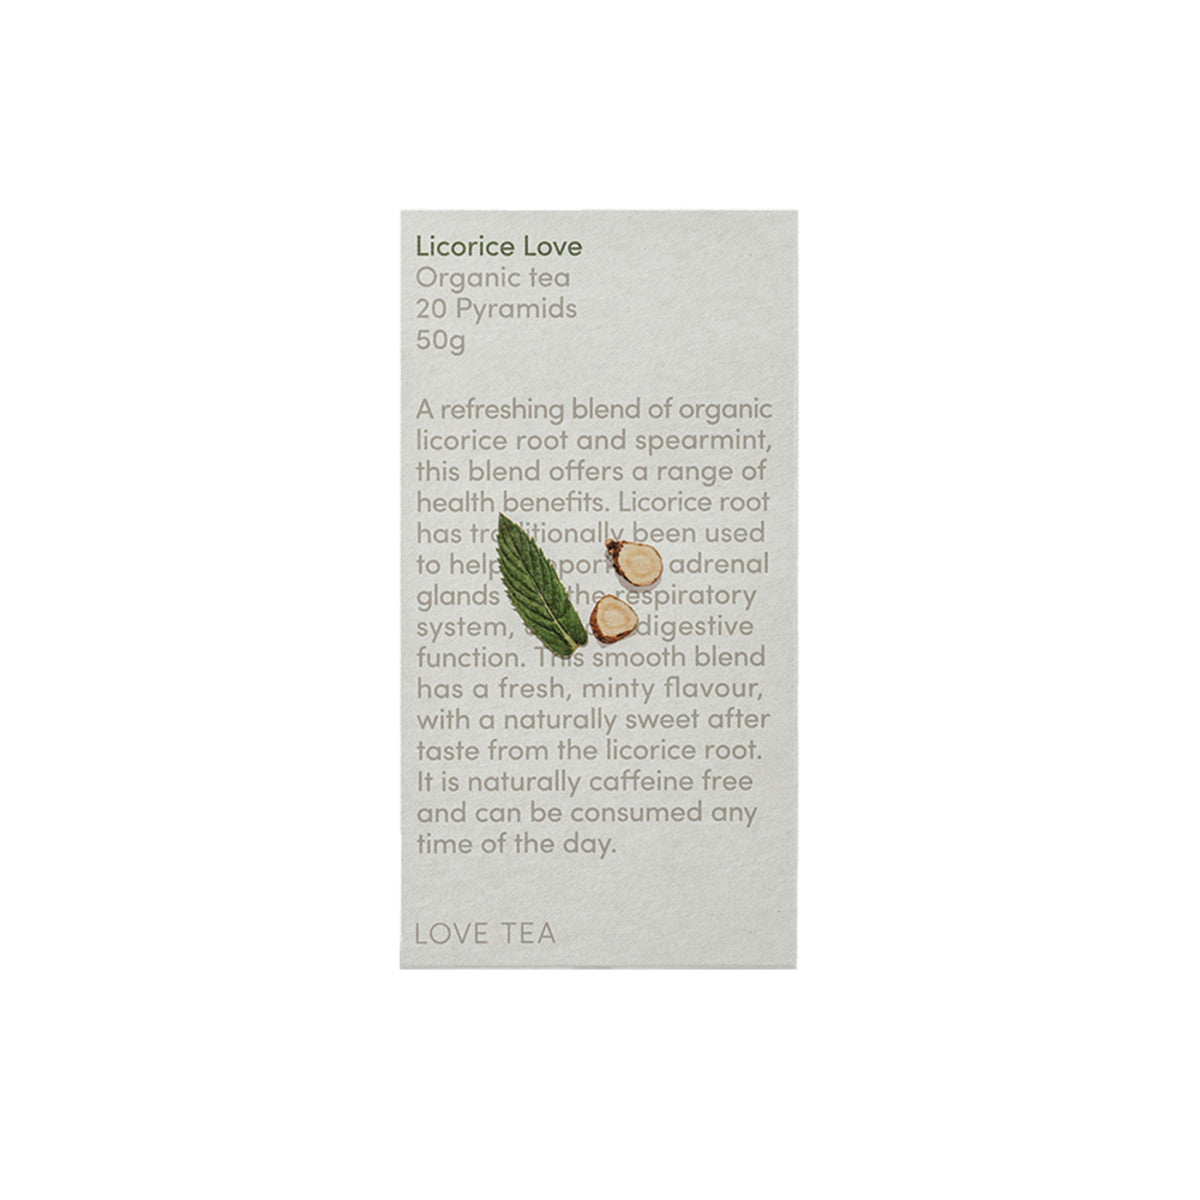 Love Tea - Organic Licorice Love Tea Bags